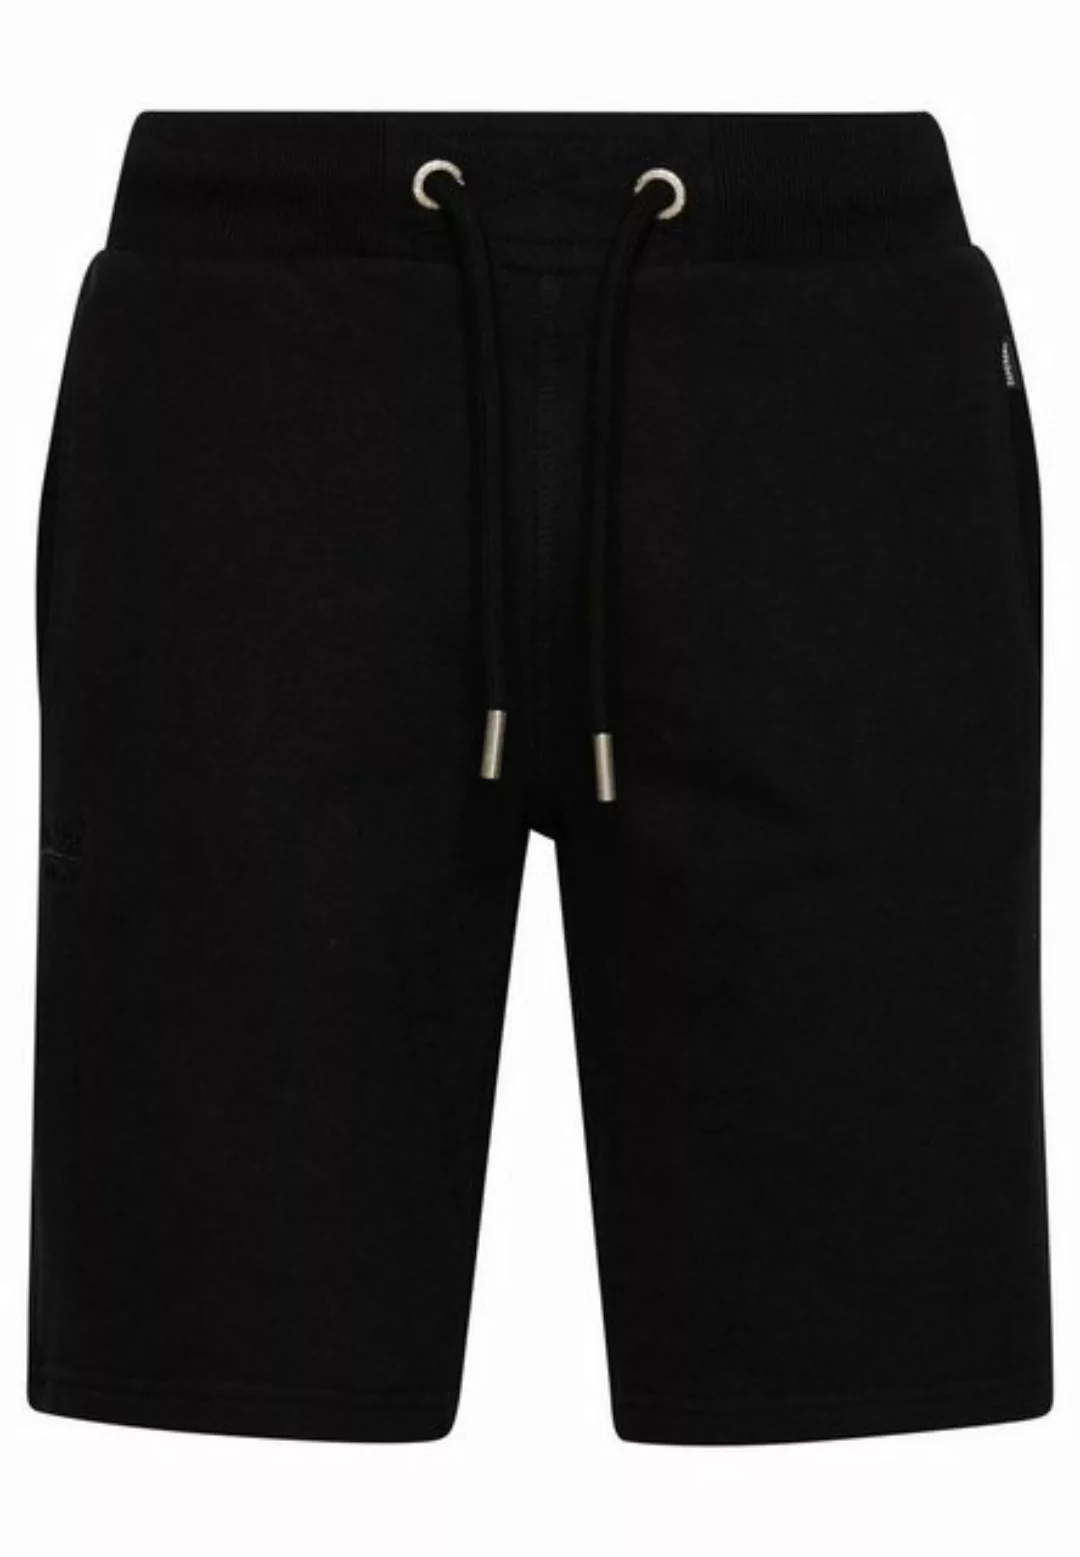 Superdry Sweatshorts Herren Jersey-Shorts - Loungewear, Jogginghose günstig online kaufen